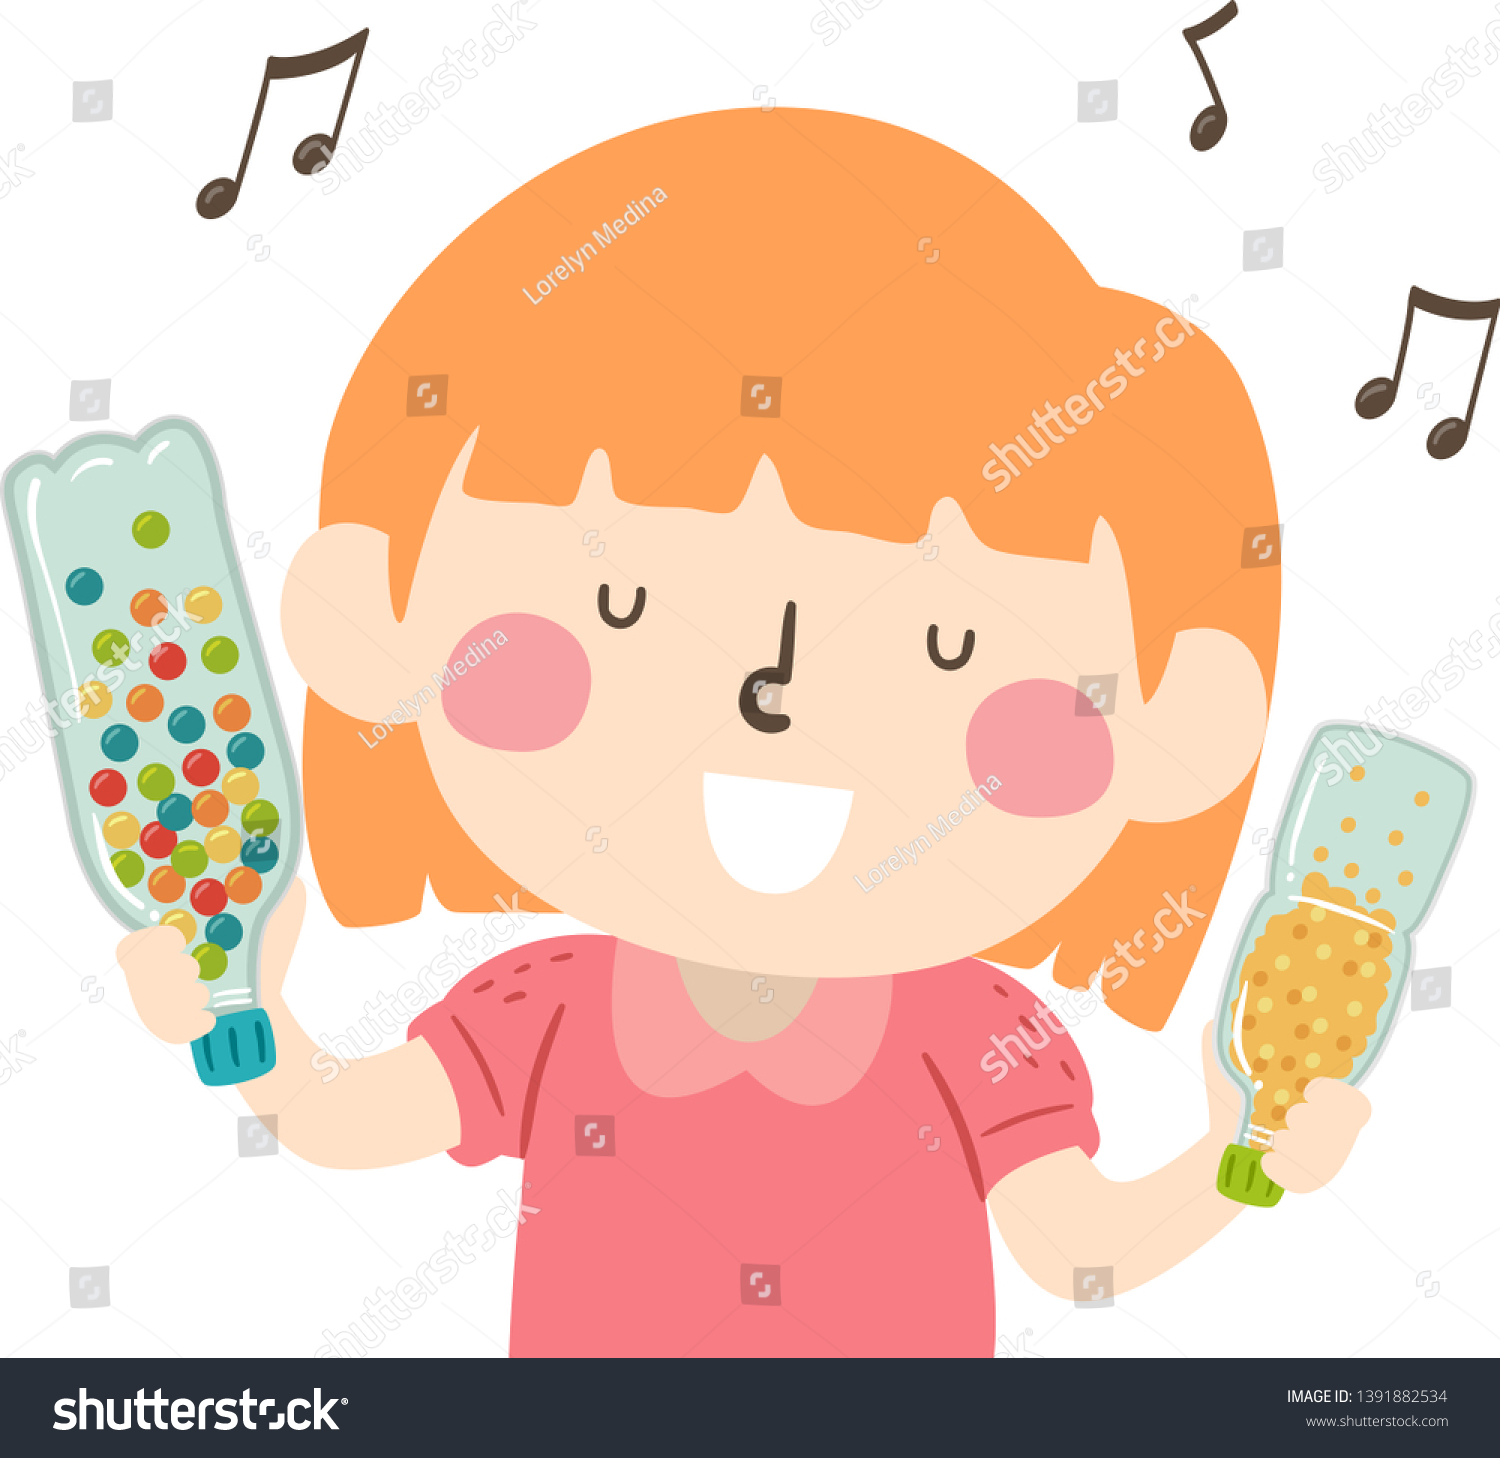 SVG of Illustration of a Kid Girl Holding Bottles with Balls Inside Creating Music. Sensory Music Shaker svg